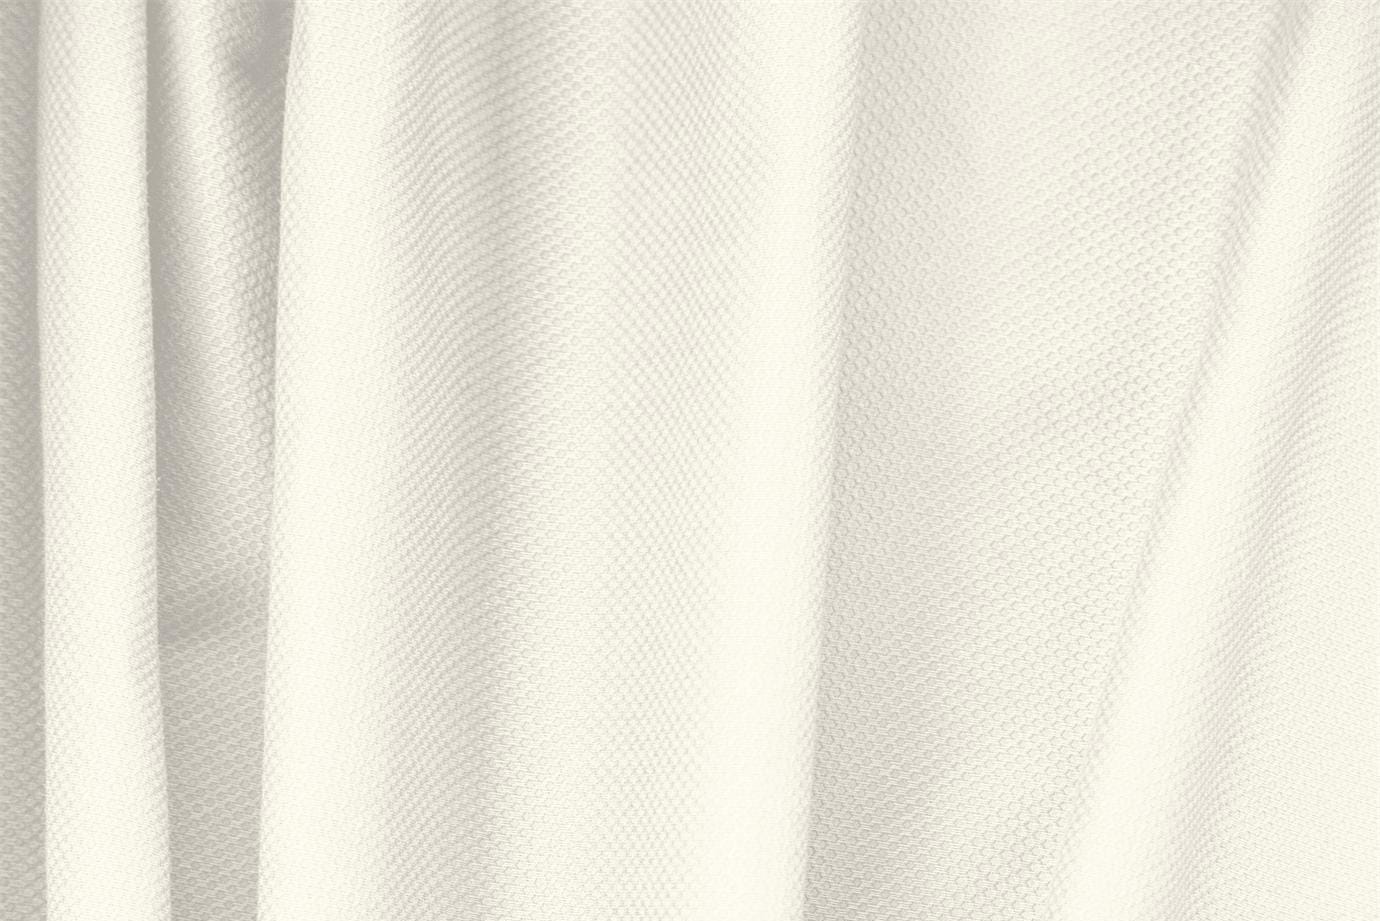 Ivory White Cotton, Stretch Pique Stretch fabric for dressmaking